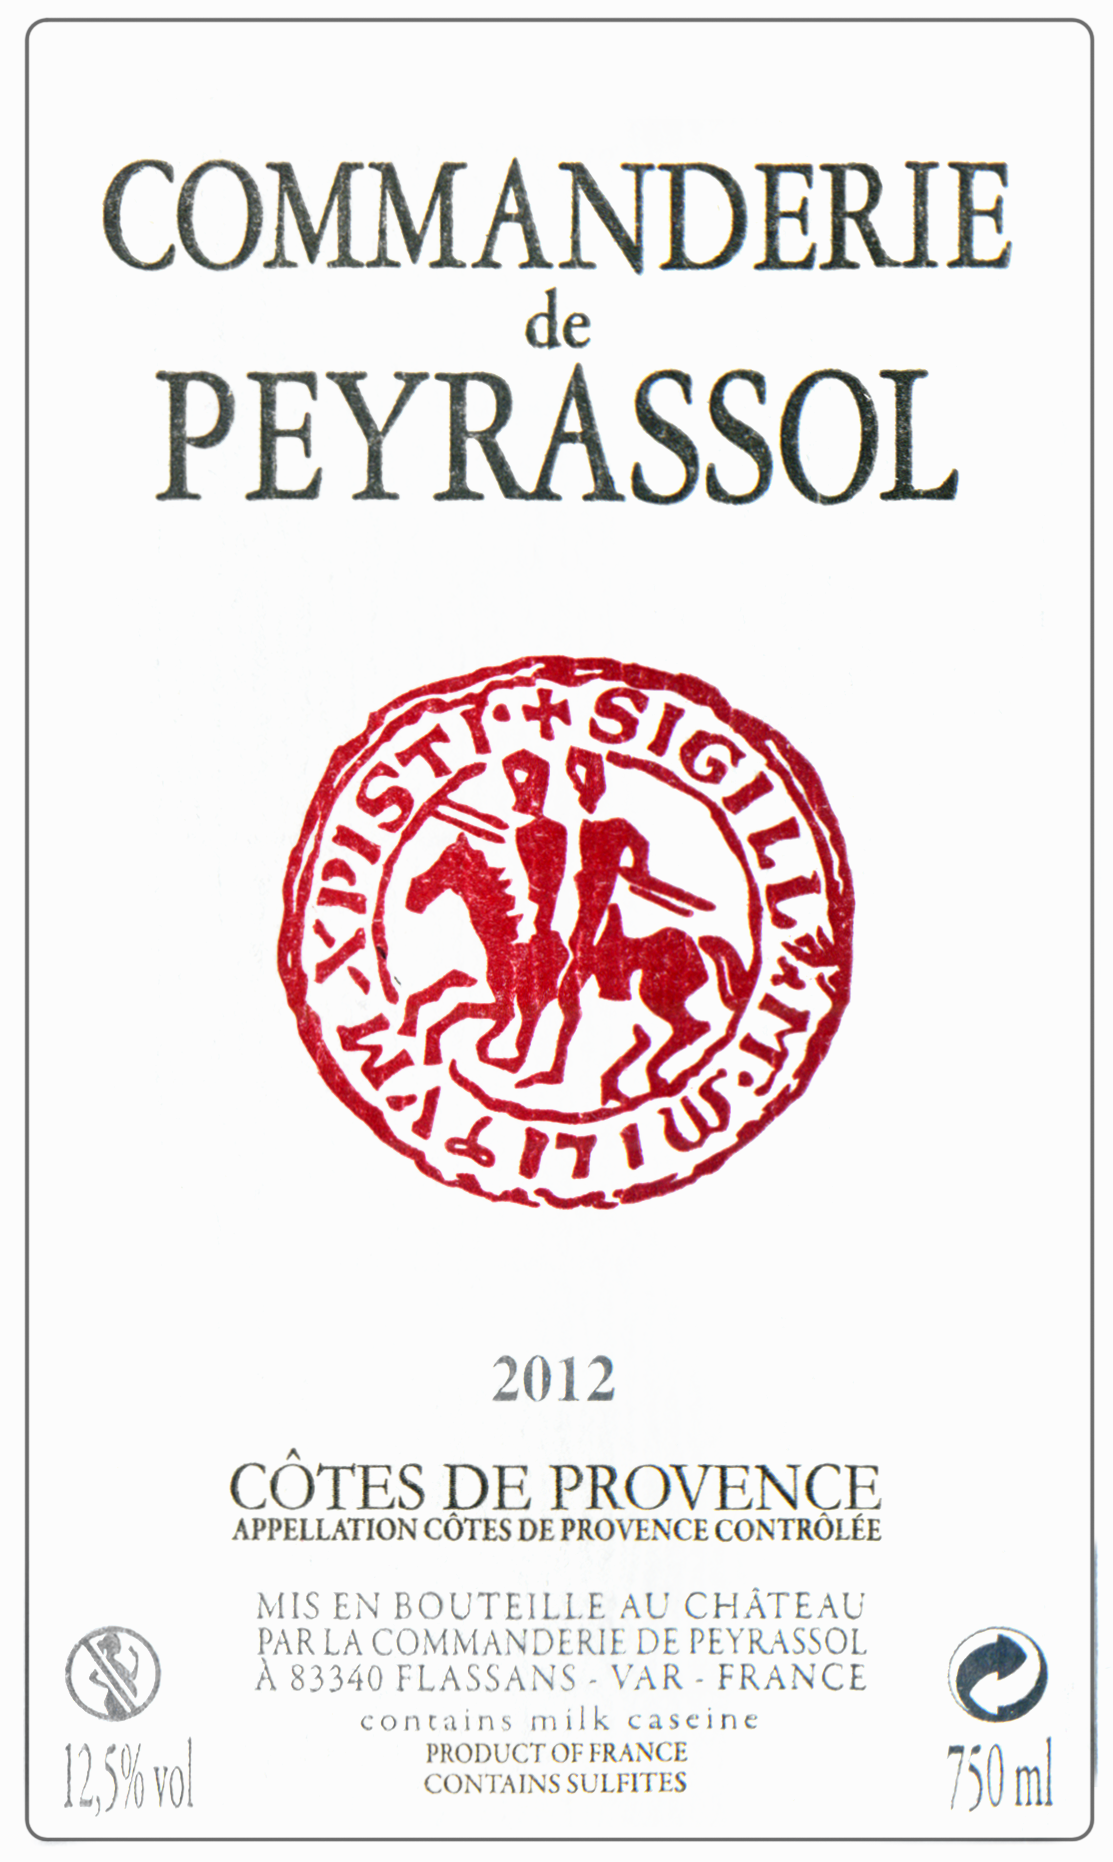 2020 Commanderie De Peyrassol Rose Cotes de Provence - click image for full description